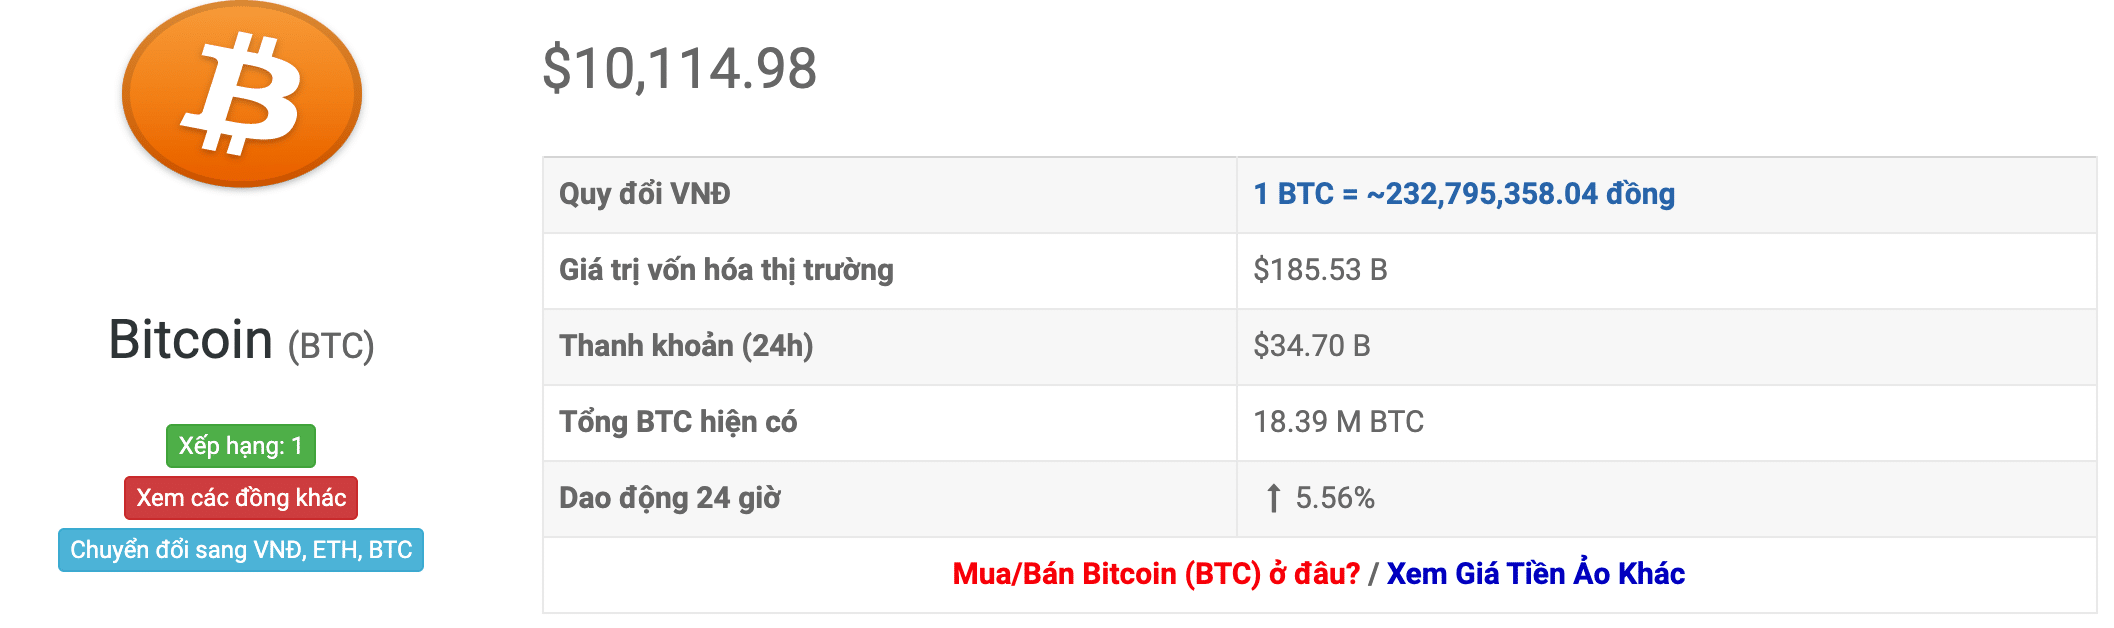 Směnný kurz bitcoinů dnes